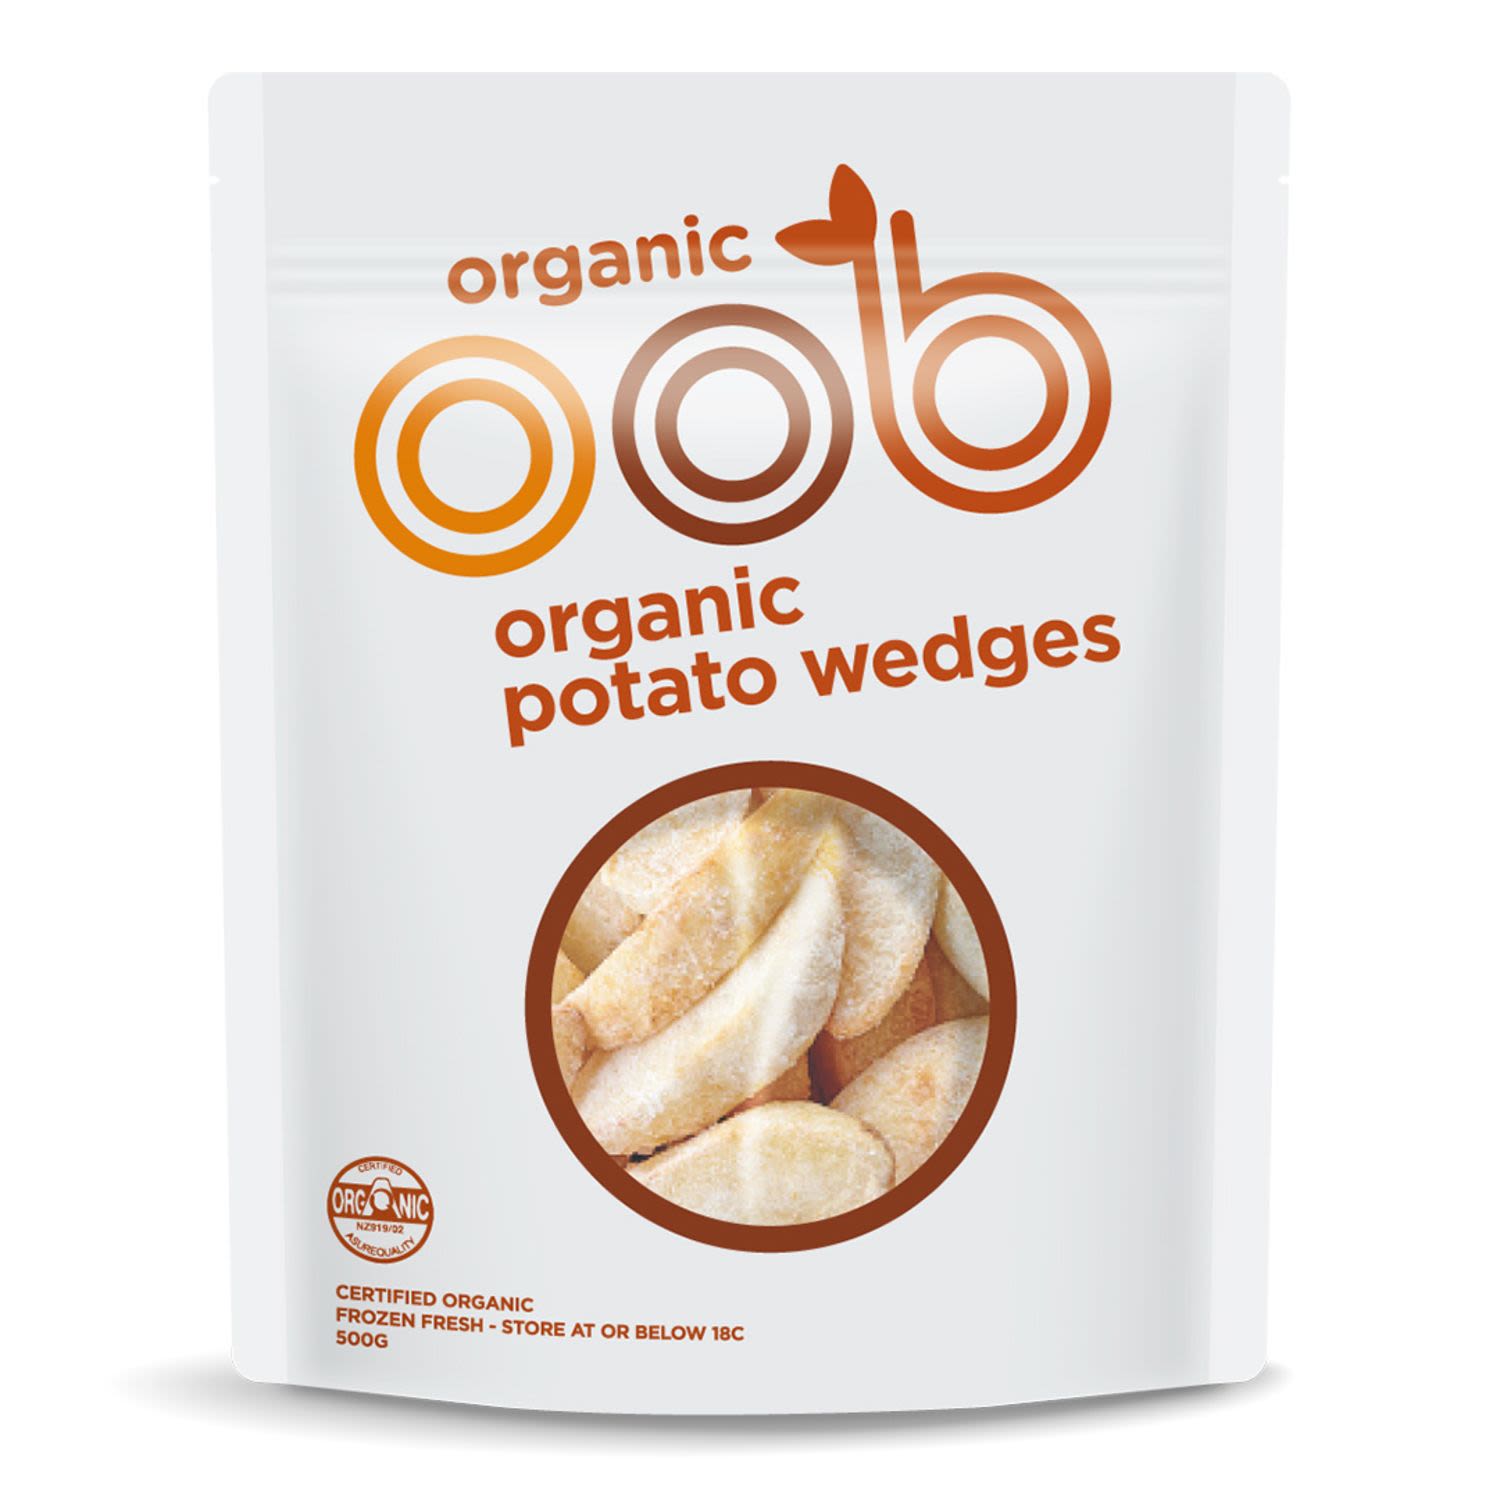 Oob Organic Potato Wedges, 100 Gram